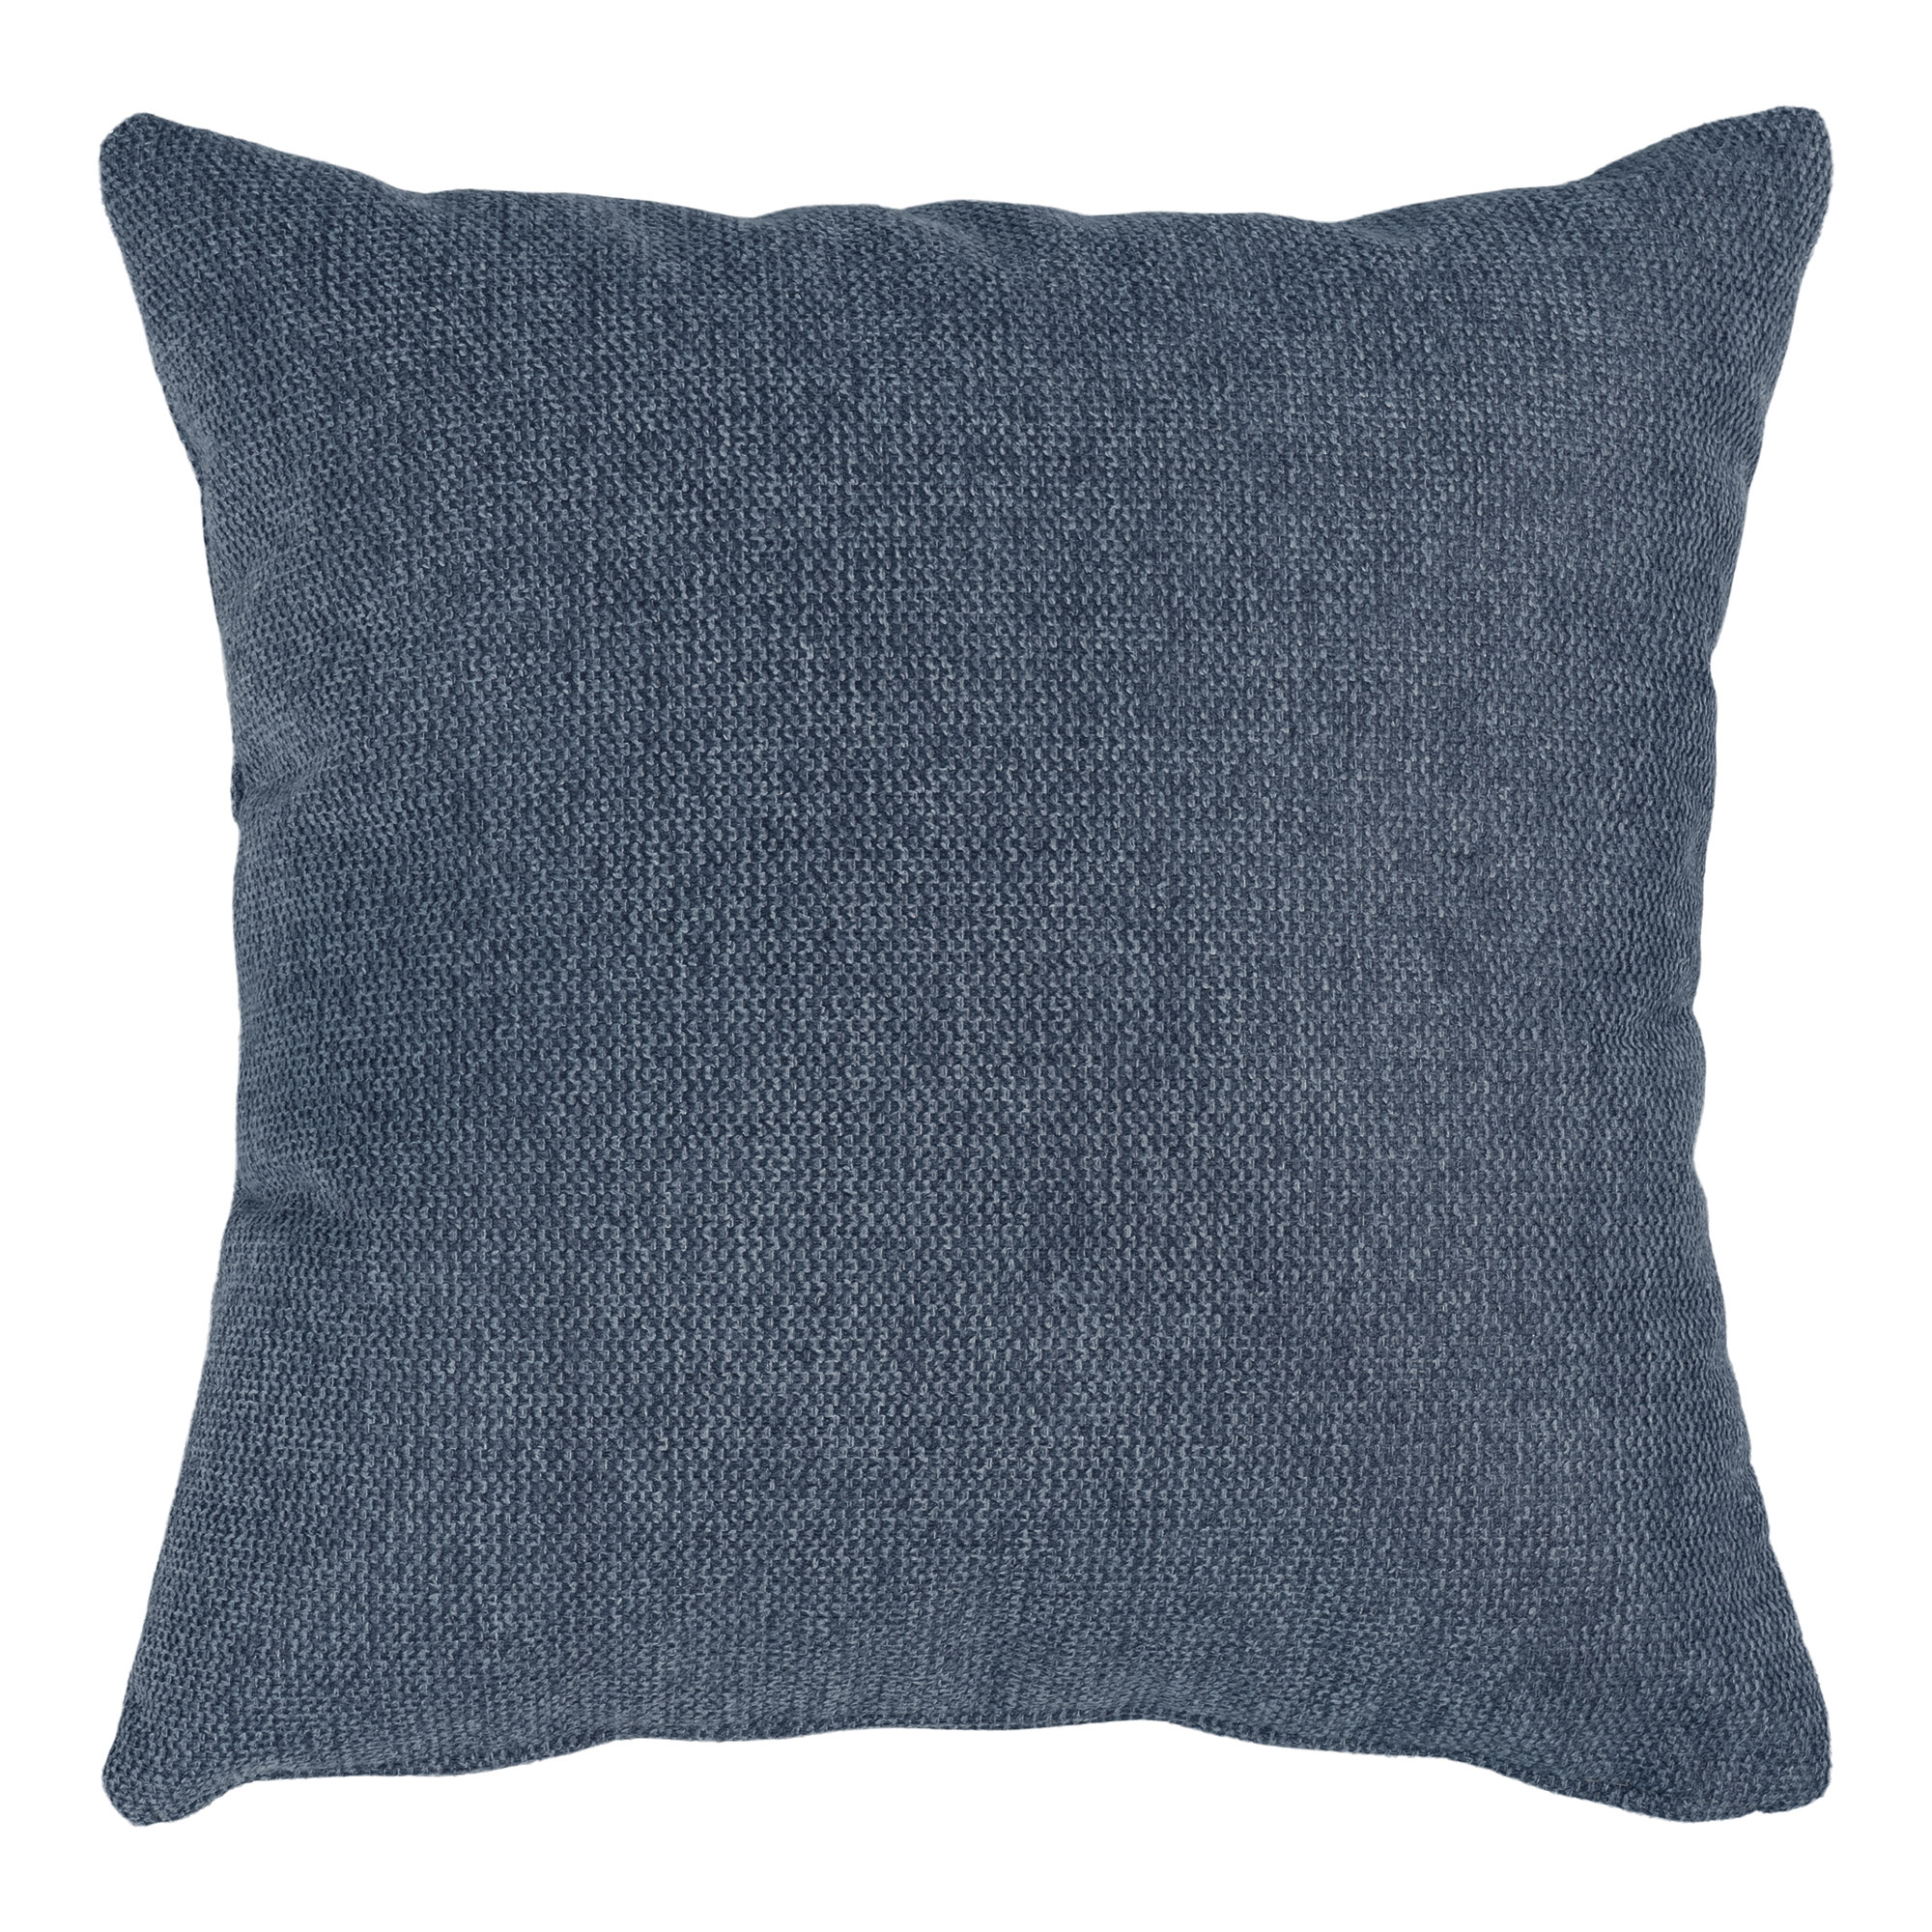 Cuscino decorativo Lido blu scuro 40x40 cm